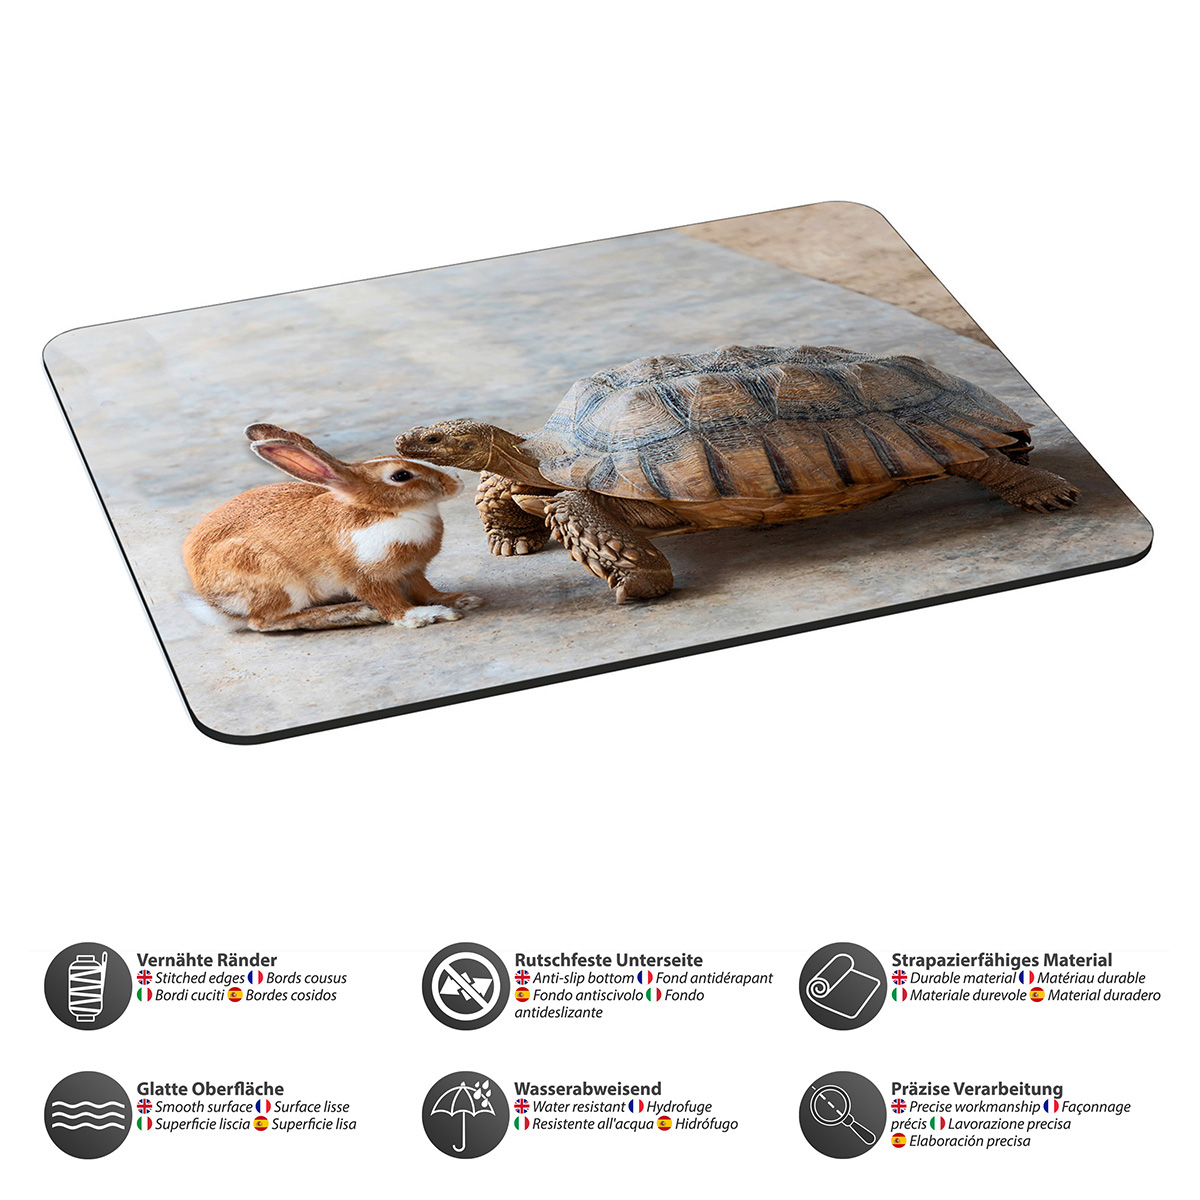 cm cm) (26 x Rabbit & Turtle, 35 Gr. PEDEA XL Design Mauspad Mauspad